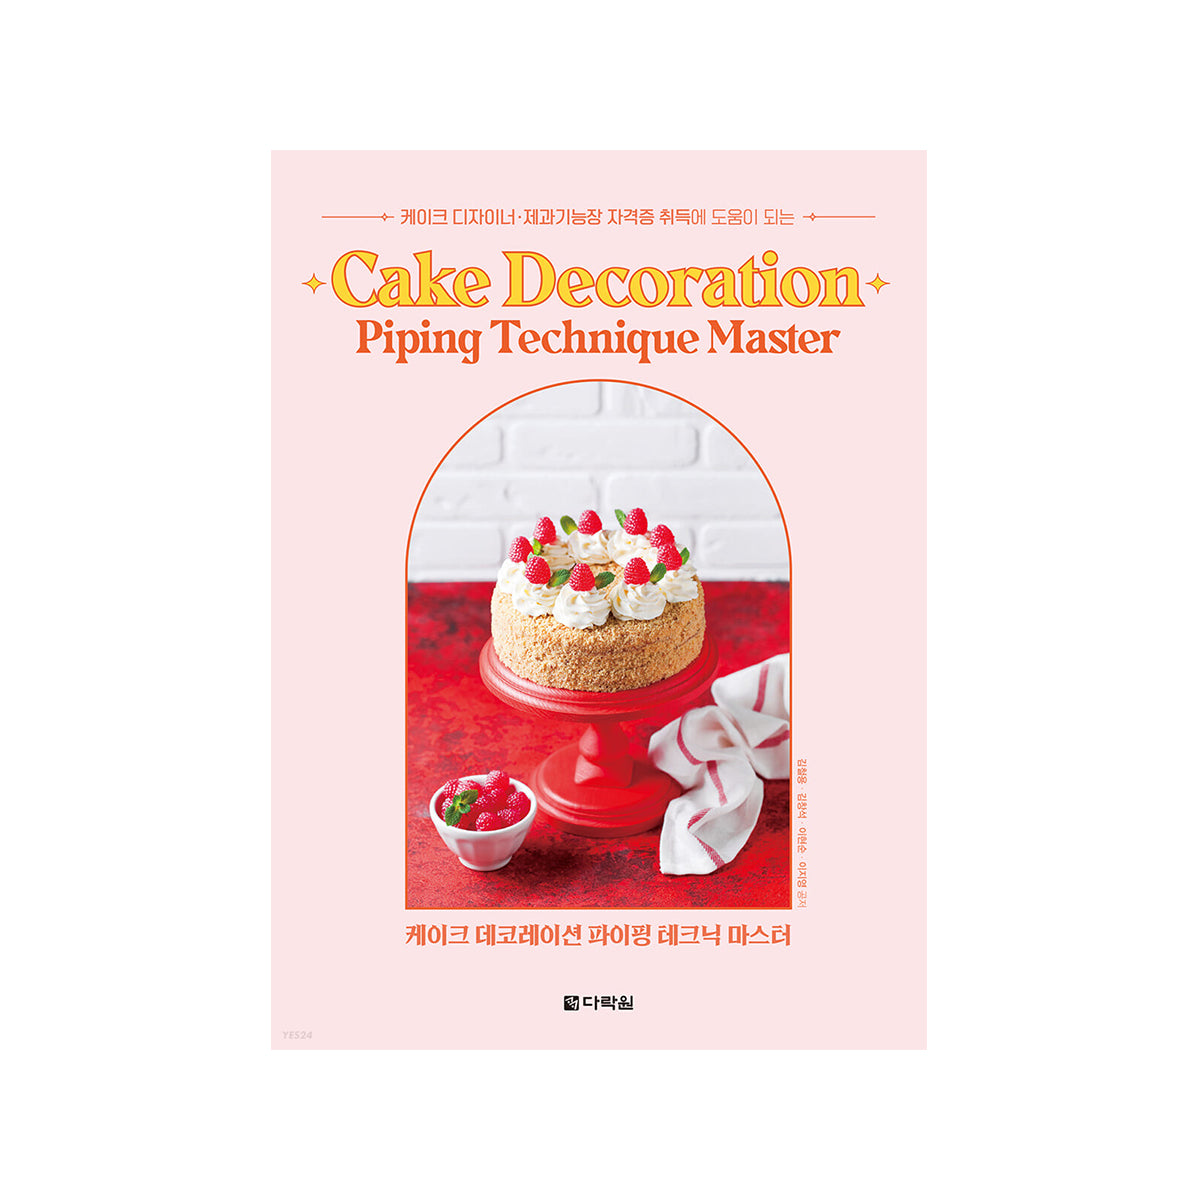 Cake Decoration Piping Technique Master Book freeshipping - K-ZONE STUDIO